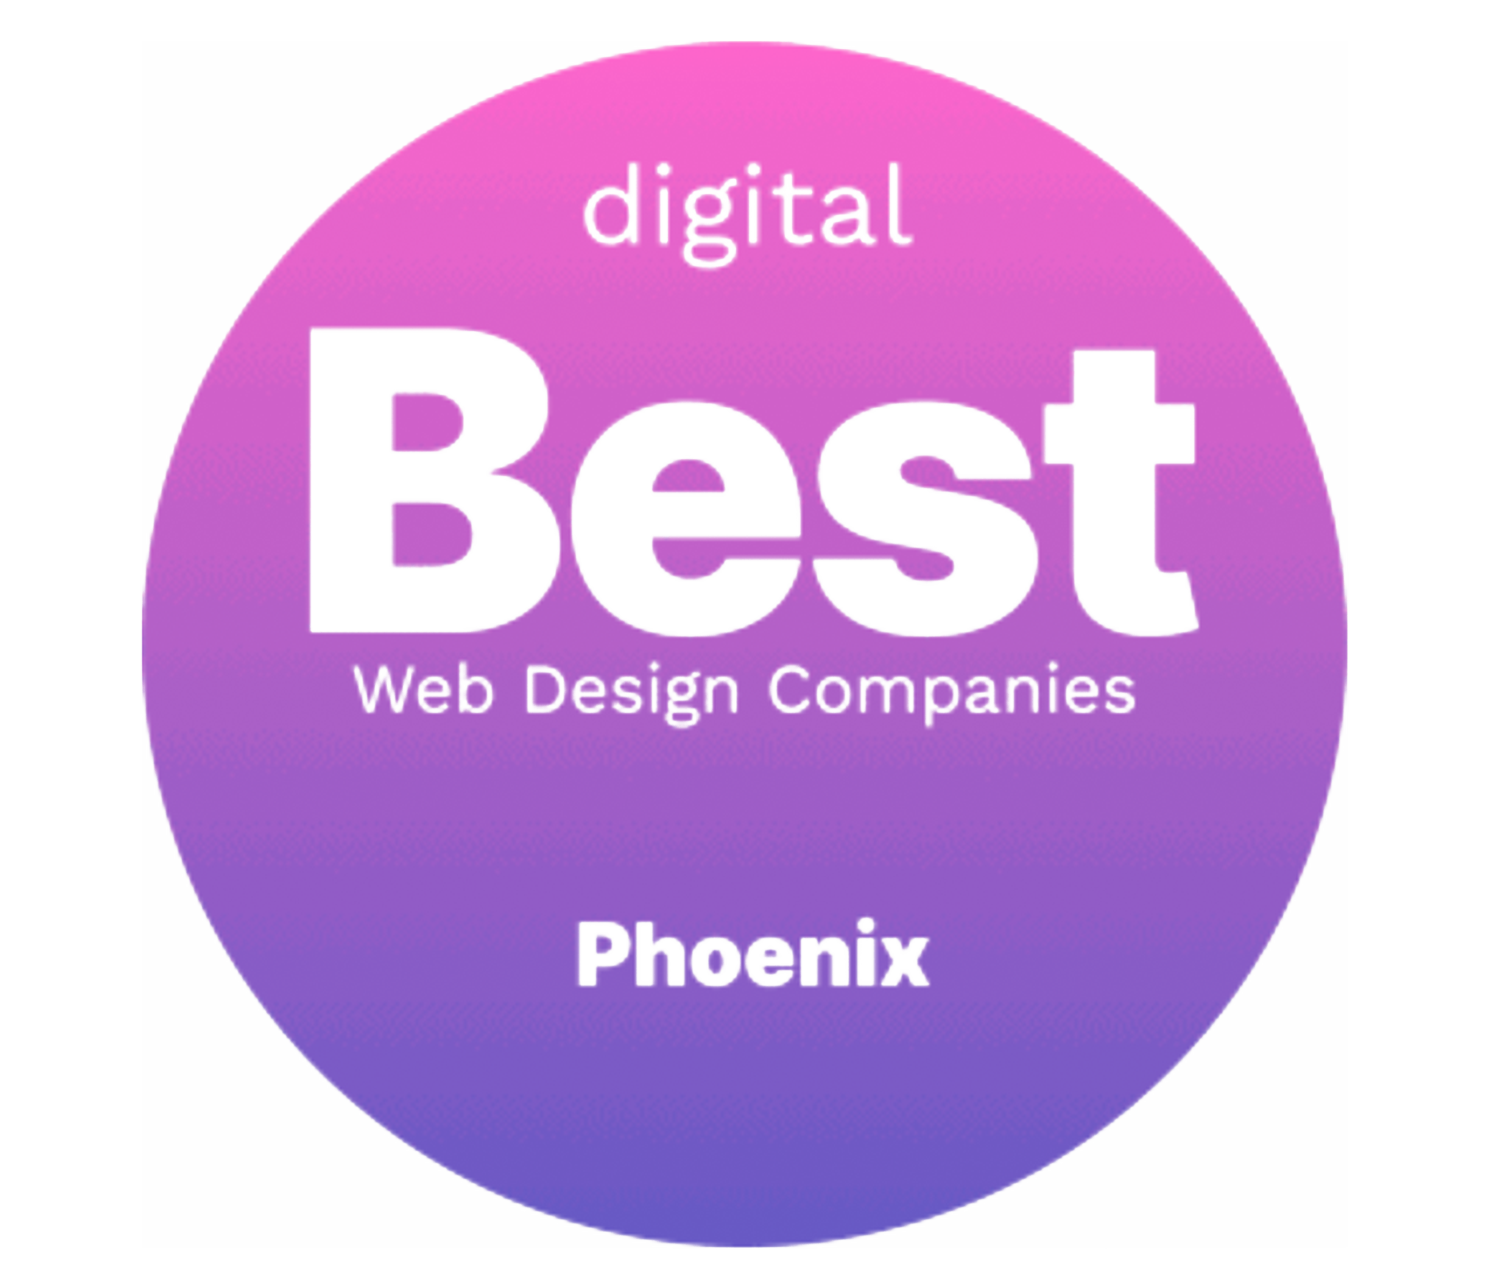 Best web design companies, Phoenix